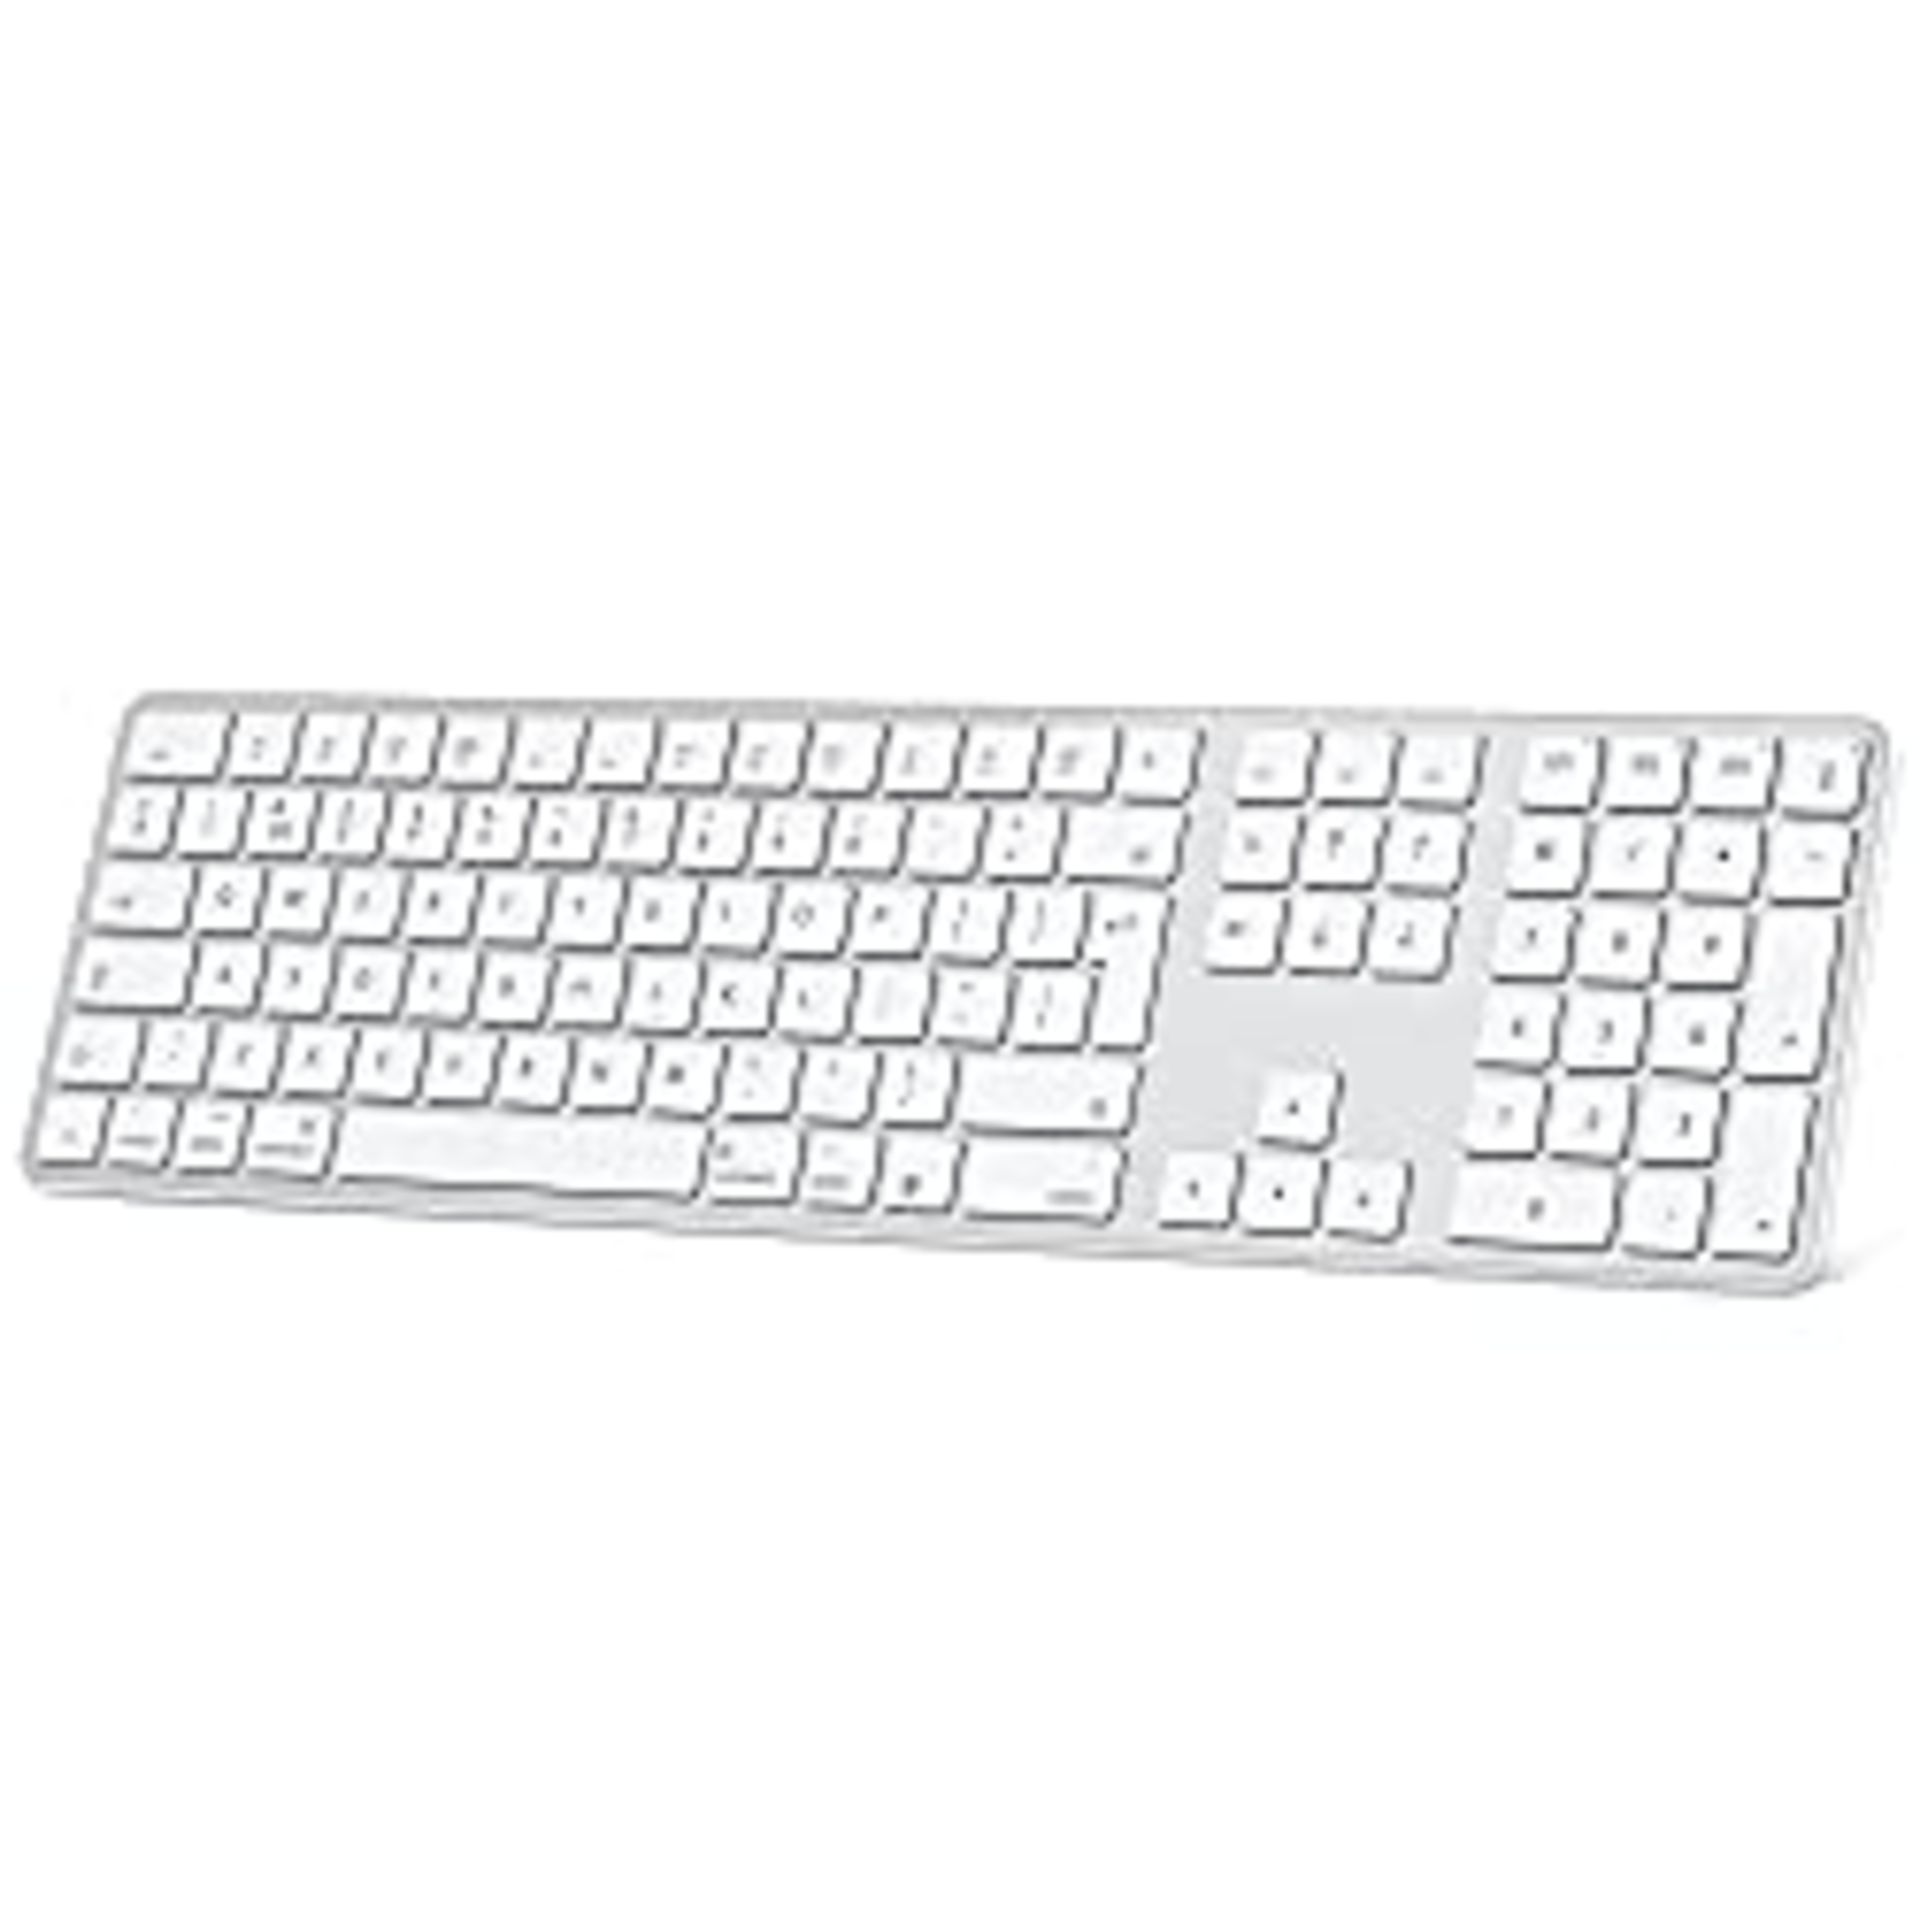 RRP £29.99 OMOTON Bluetooth Keyboard for Apple MacBook/iMac/MacBook Pro/Air/Mac OS